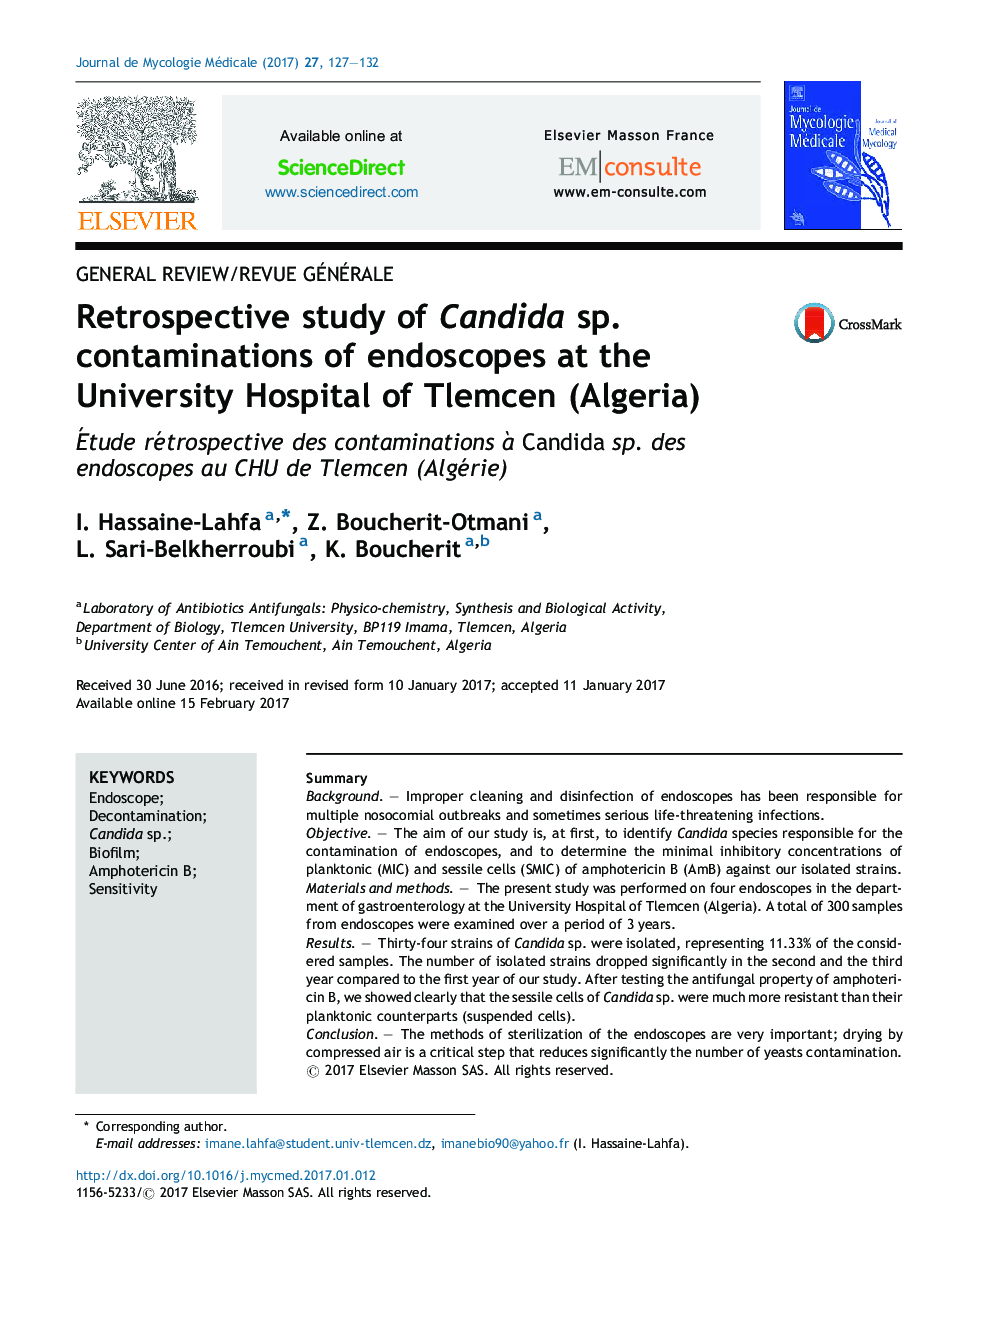 Retrospective study of Candida sp. contaminations of endoscopes at the University Hospital of Tlemcen (Algeria)